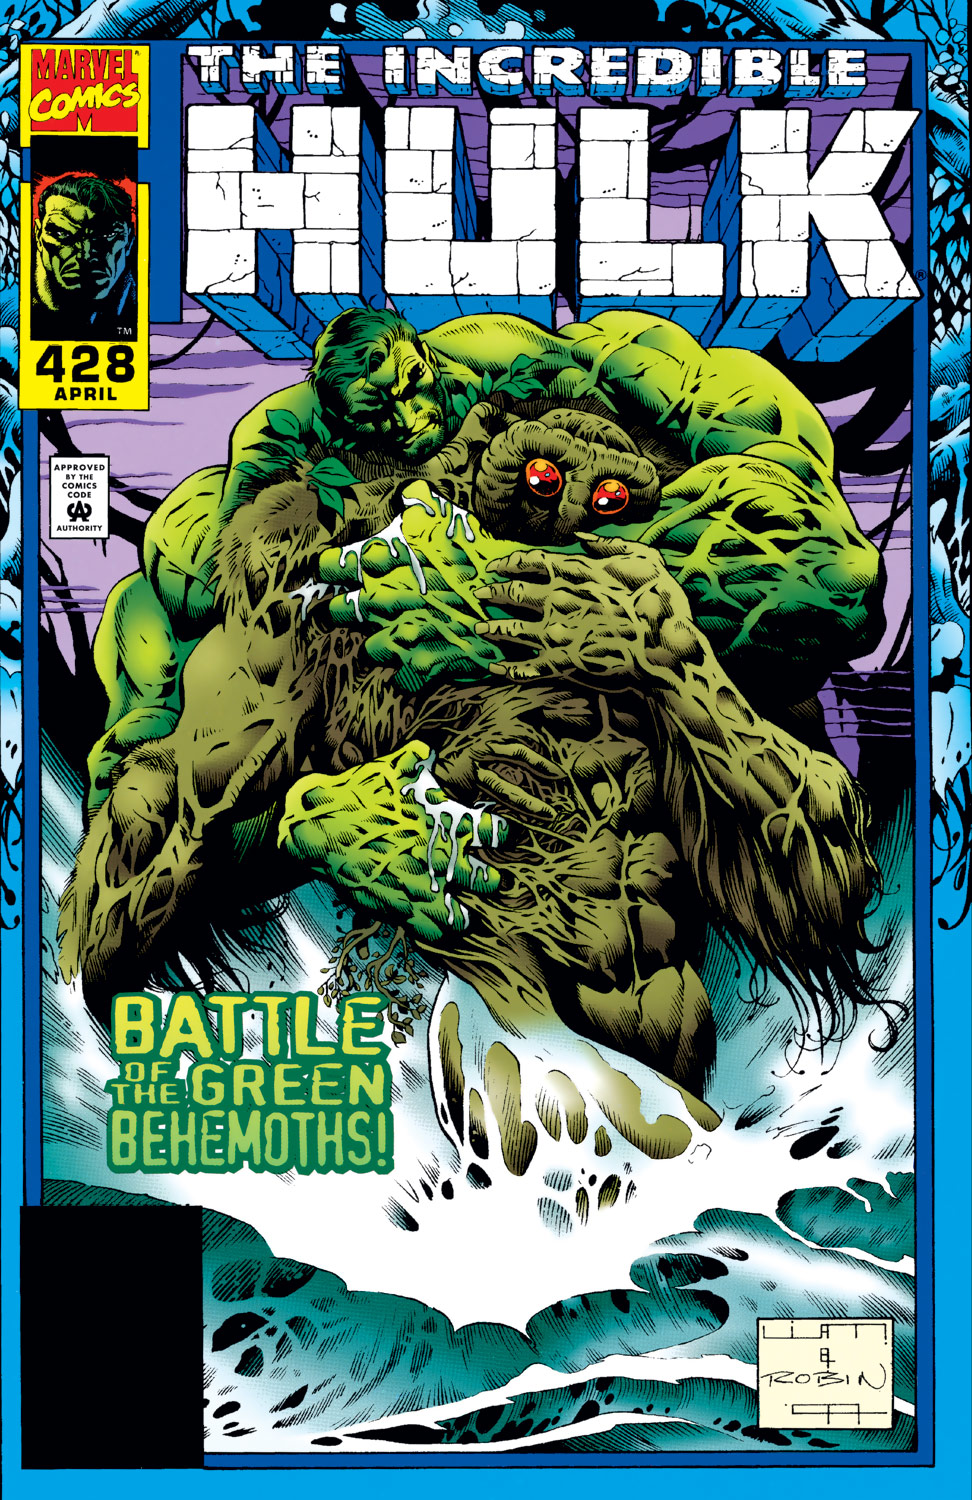 The Incredible Hulk #428